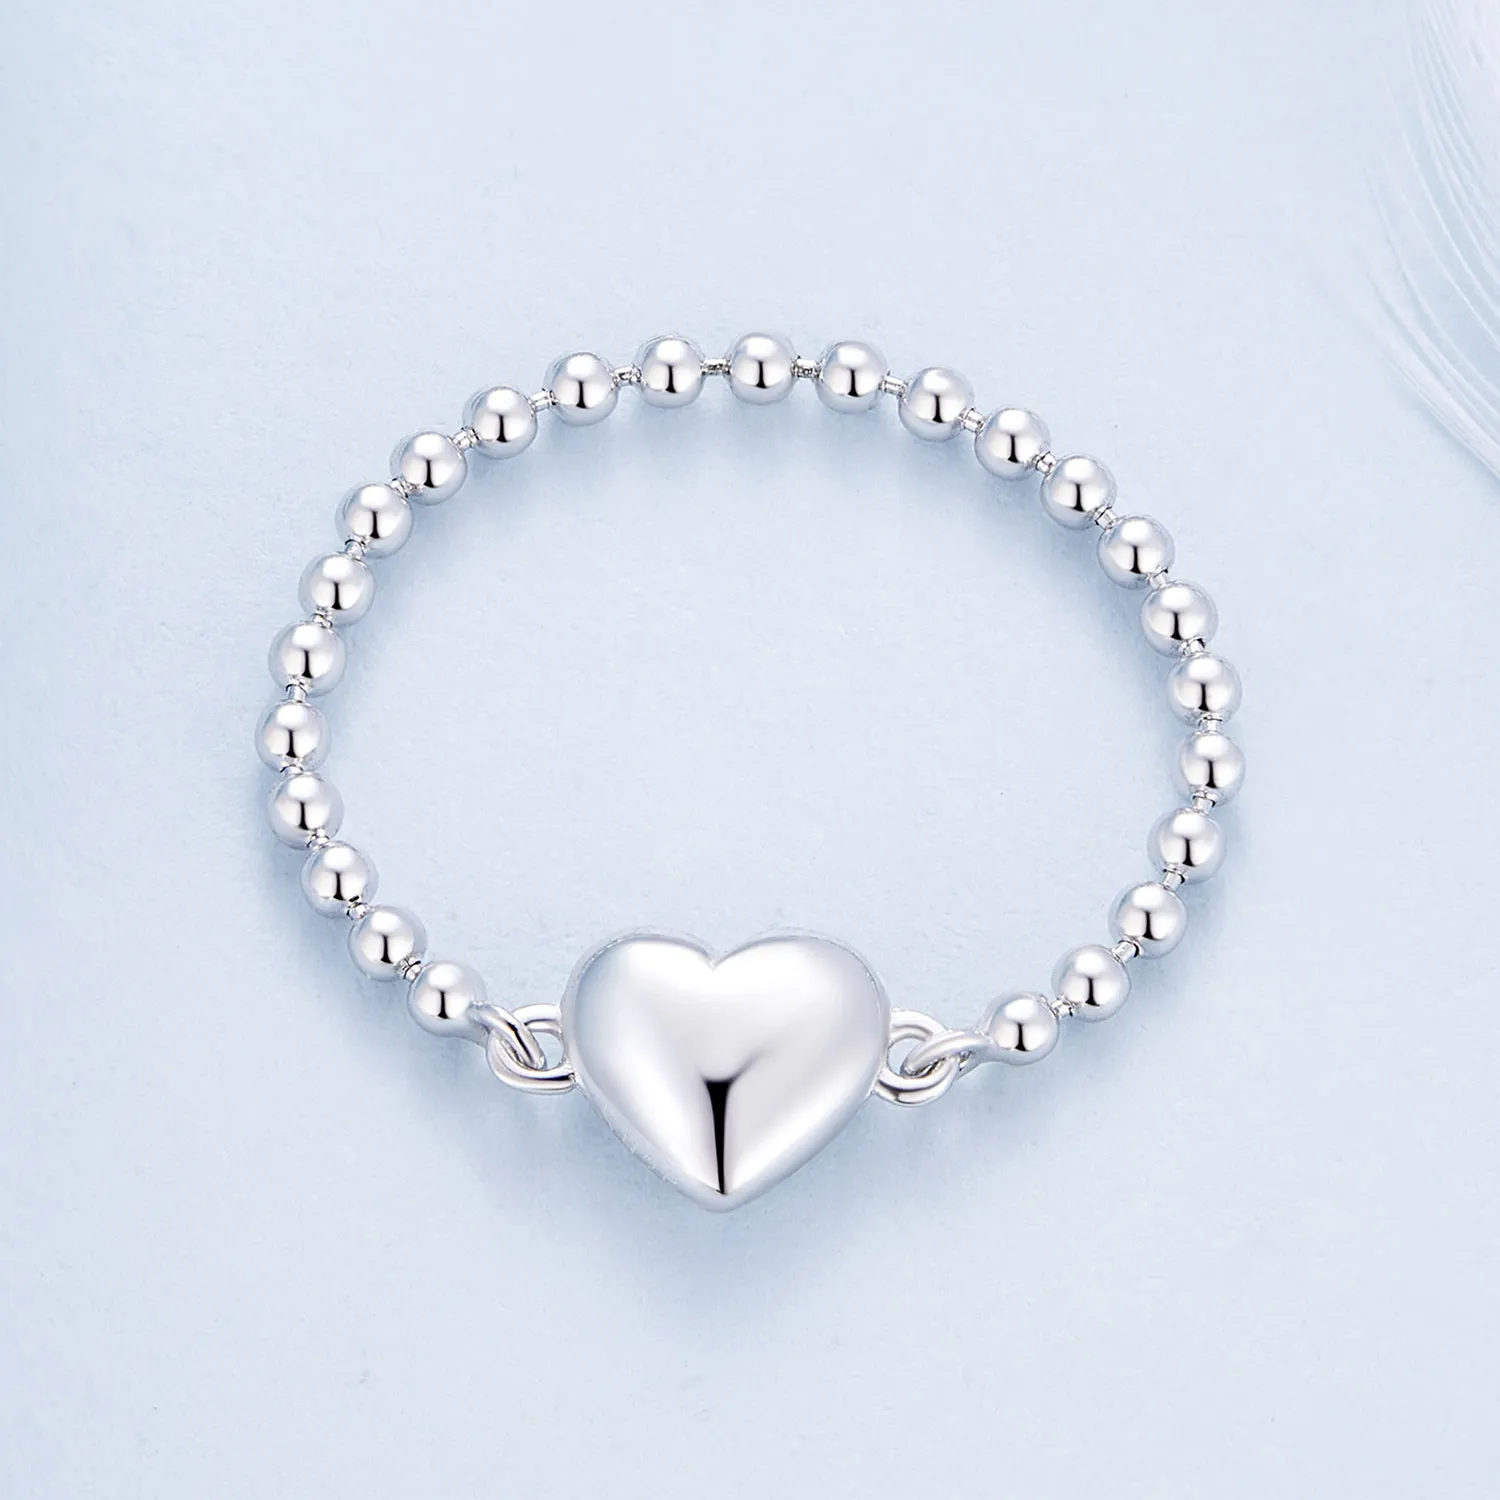 Pandora Style Heart Shape Chain Ring - BSR488